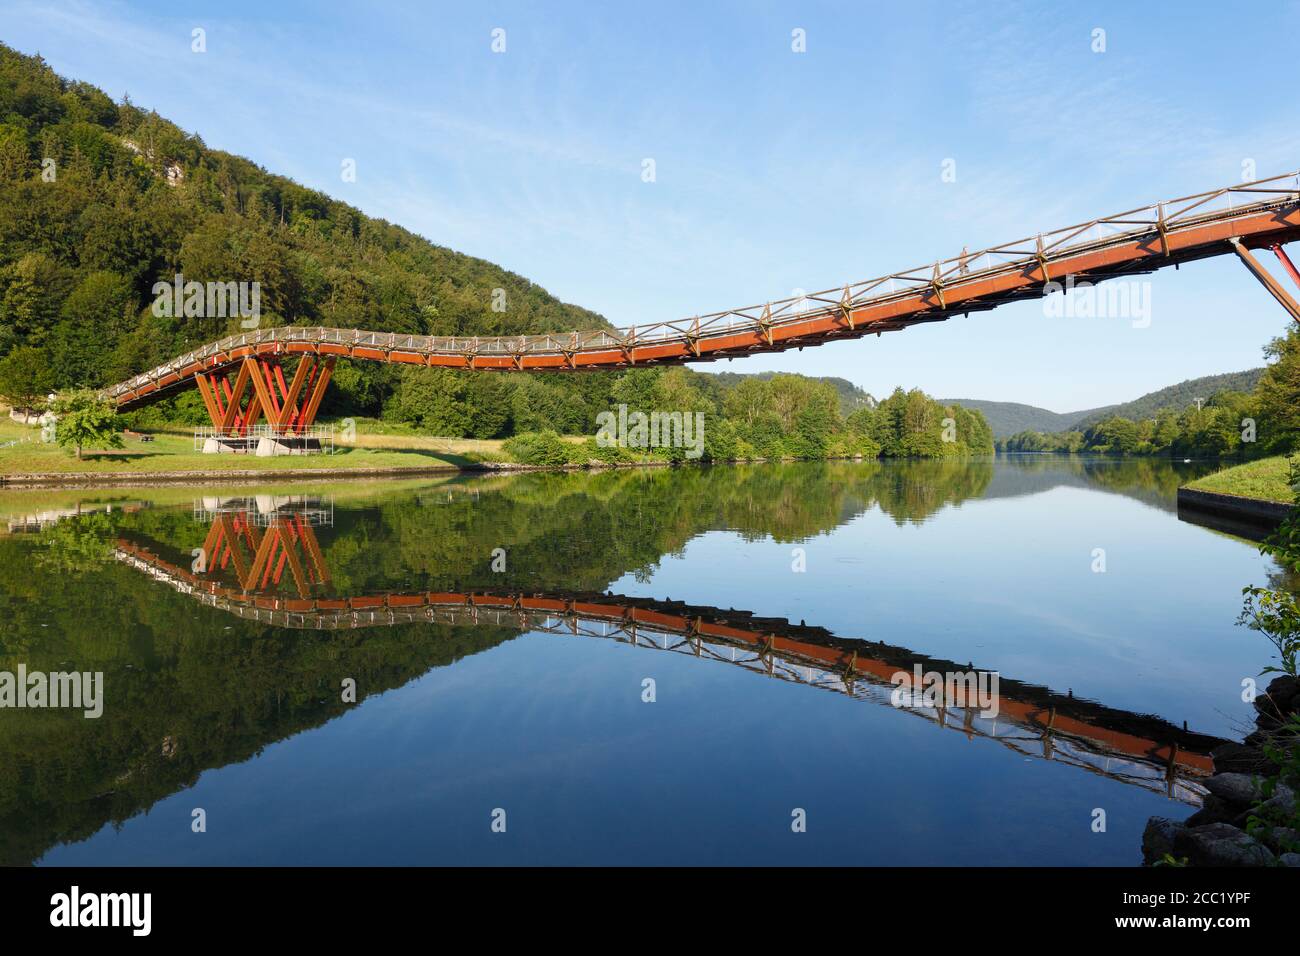 Germany, Bavaria, Lower Bavaria, View of wooden Tatzelwurm Bridge Stock Photo